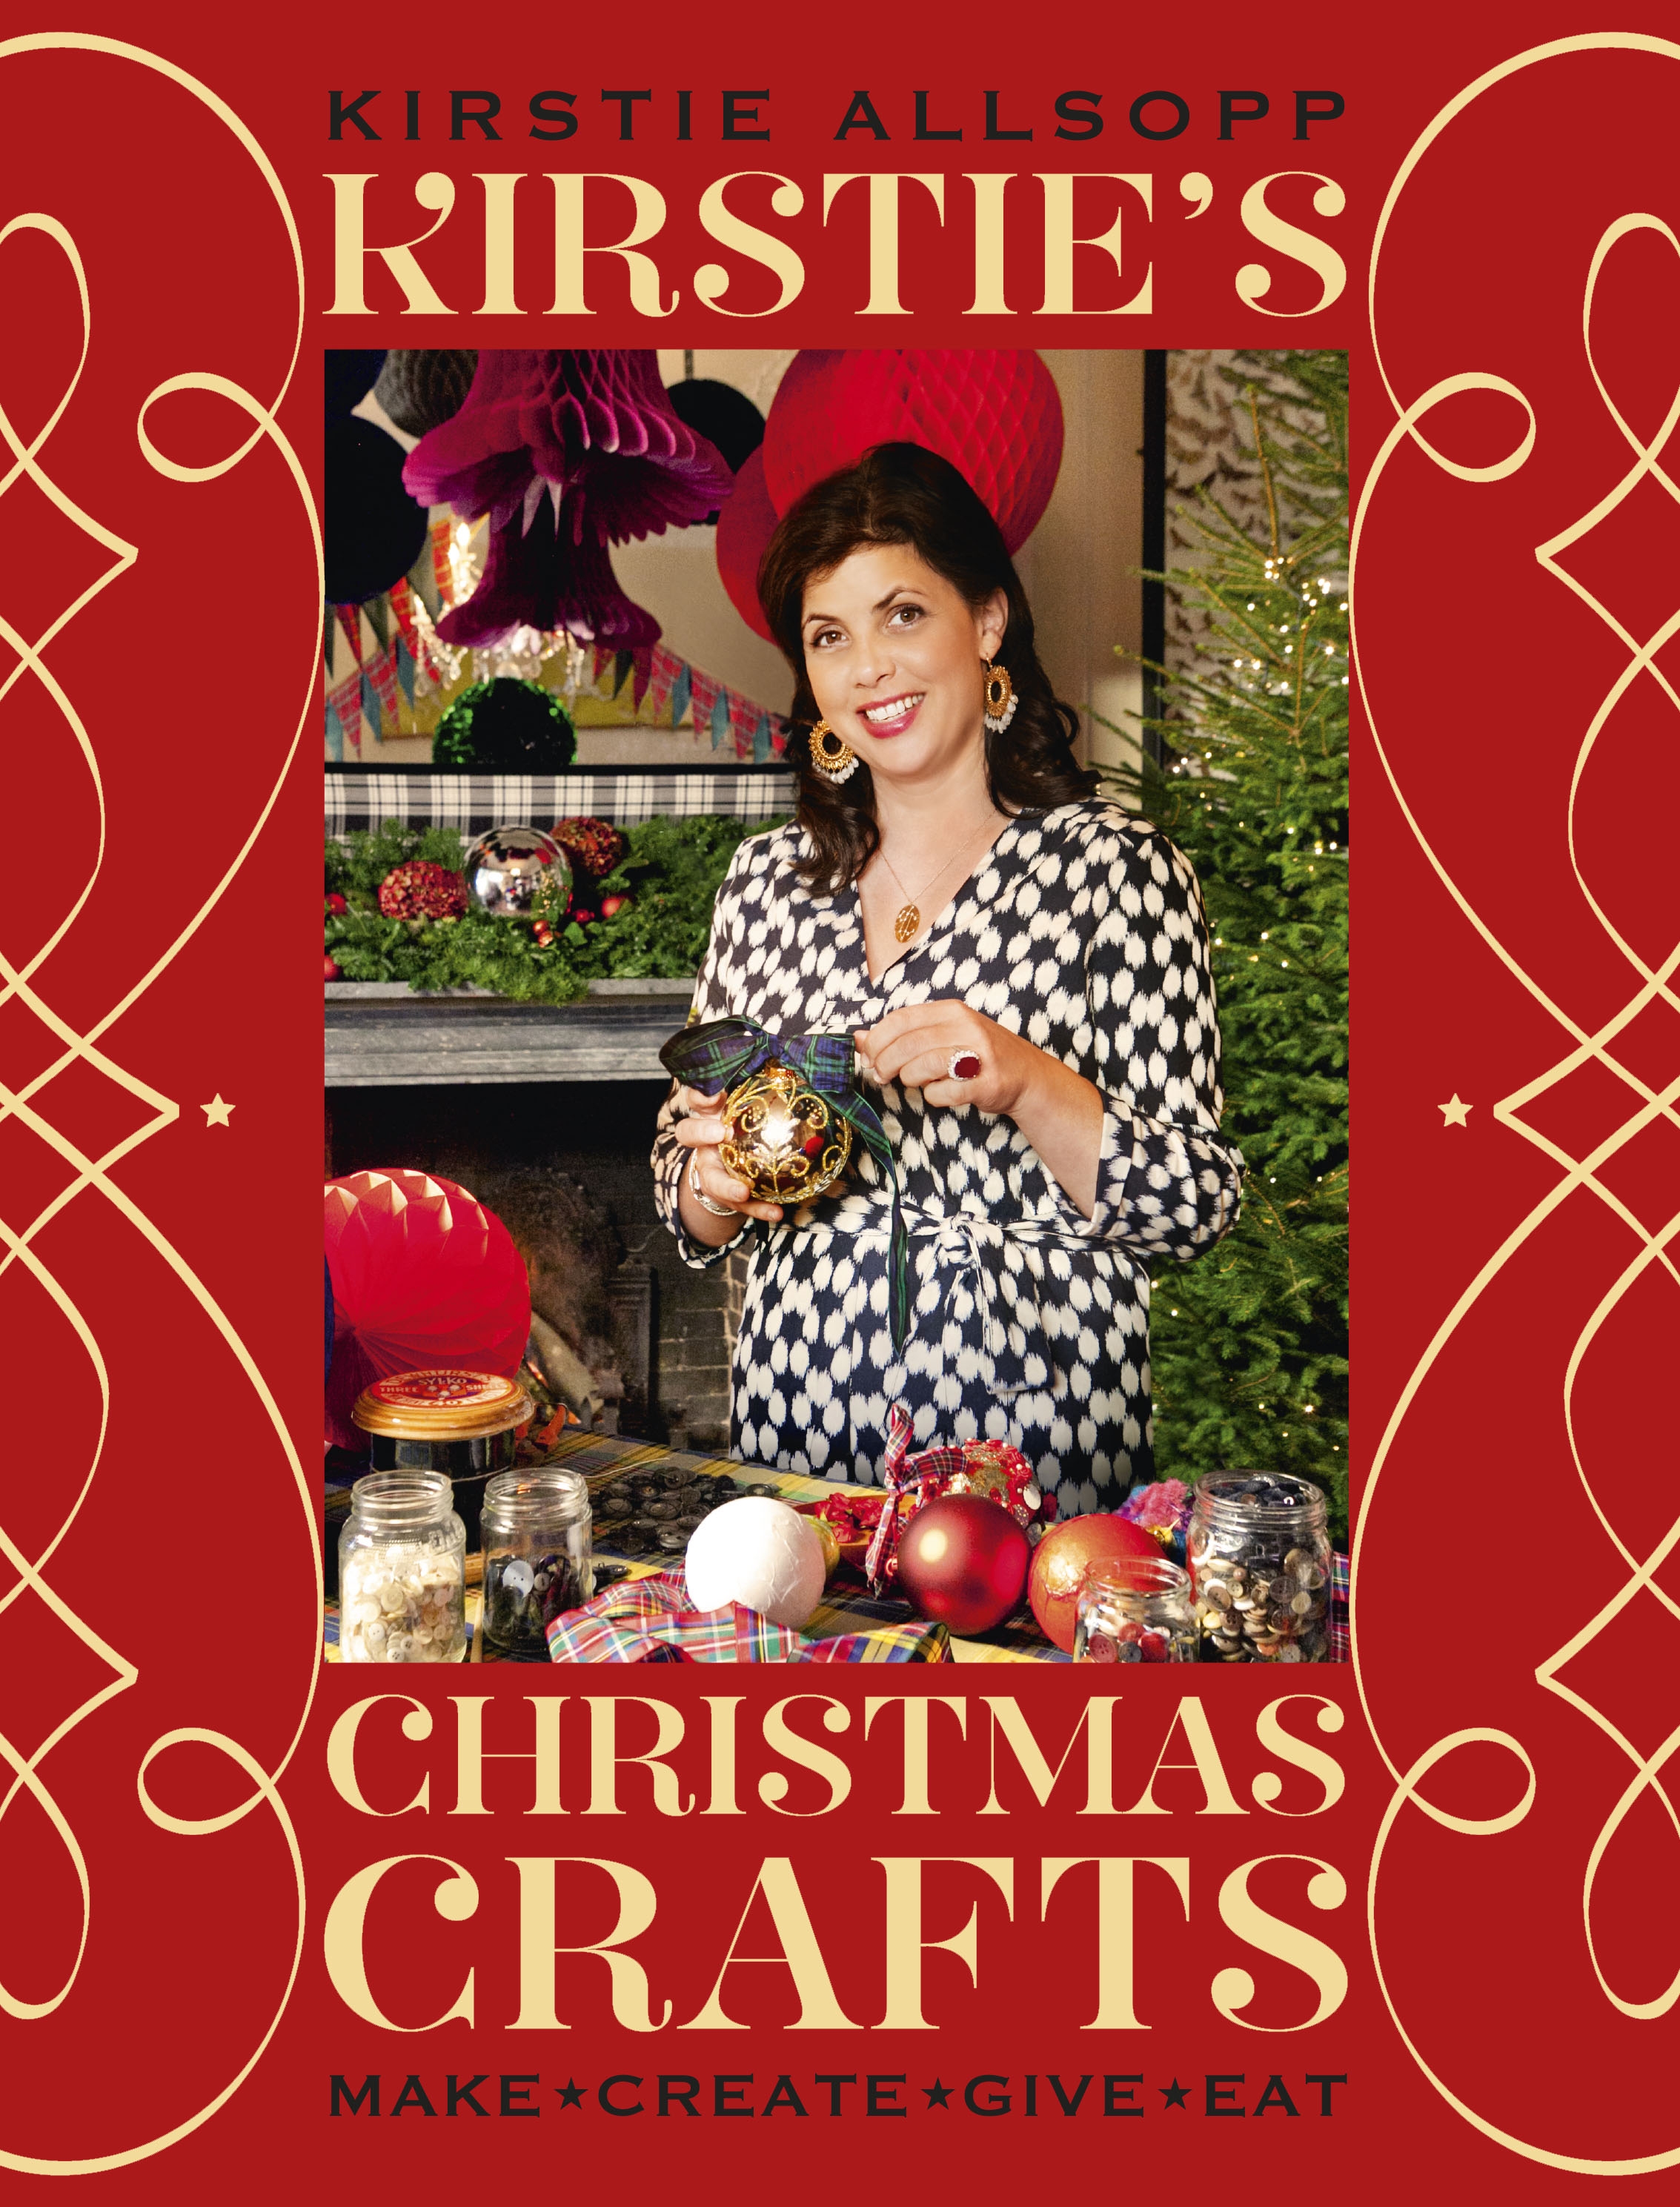 Kirstie's Christmas Crafts by Kirstie Allsopp Hachette UK